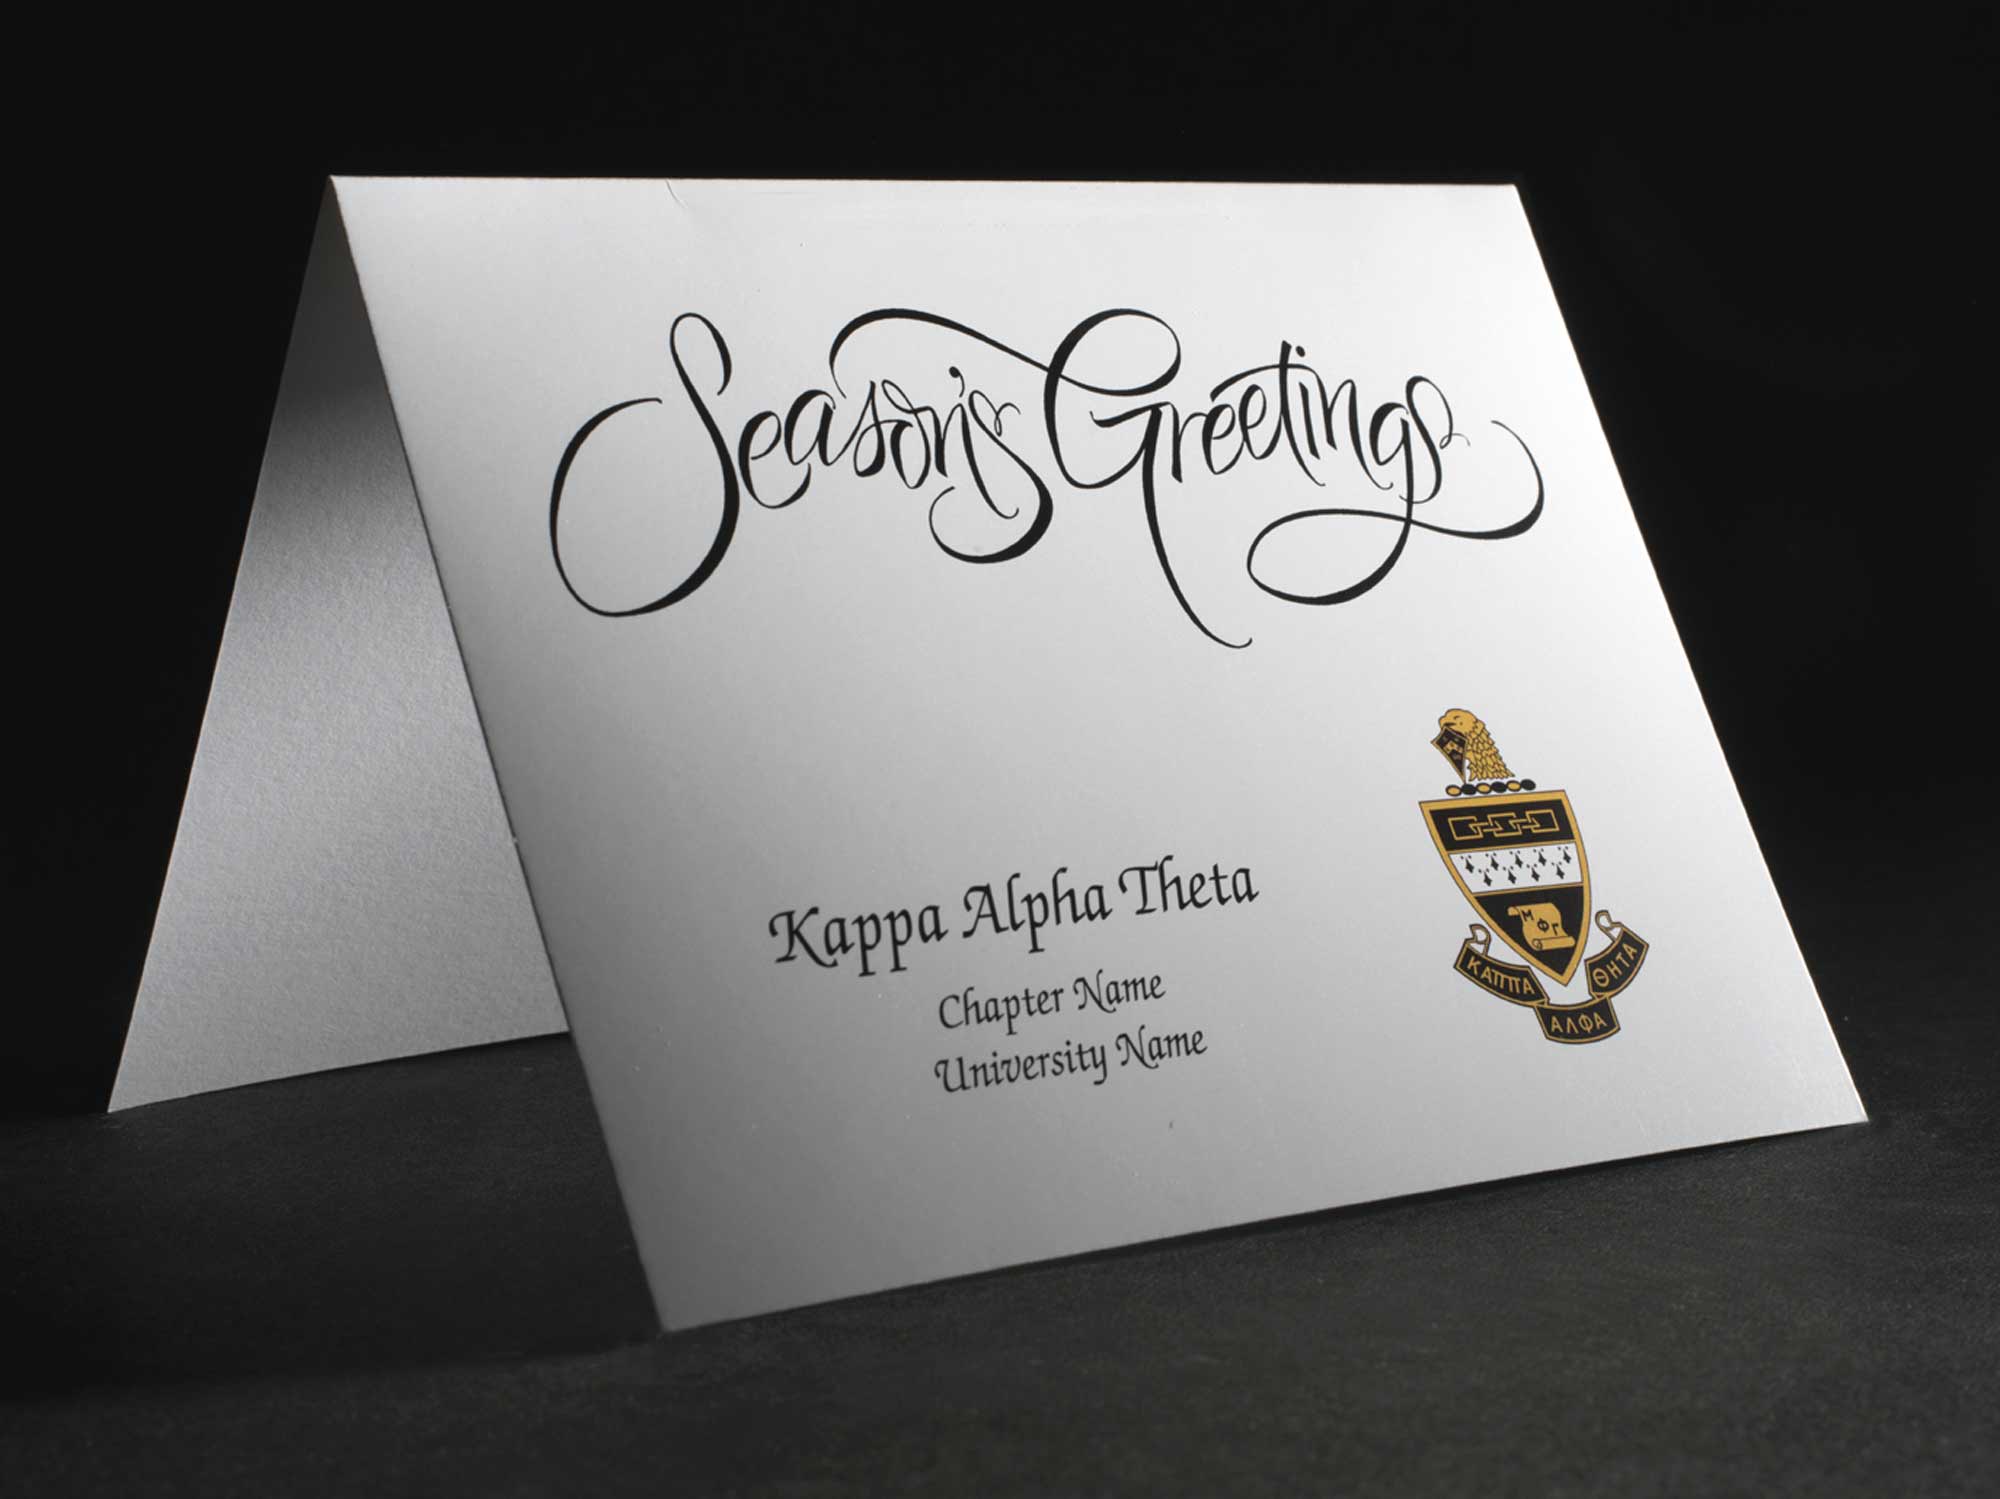 Seasons Greetings Cards Kappa Alpha Theta